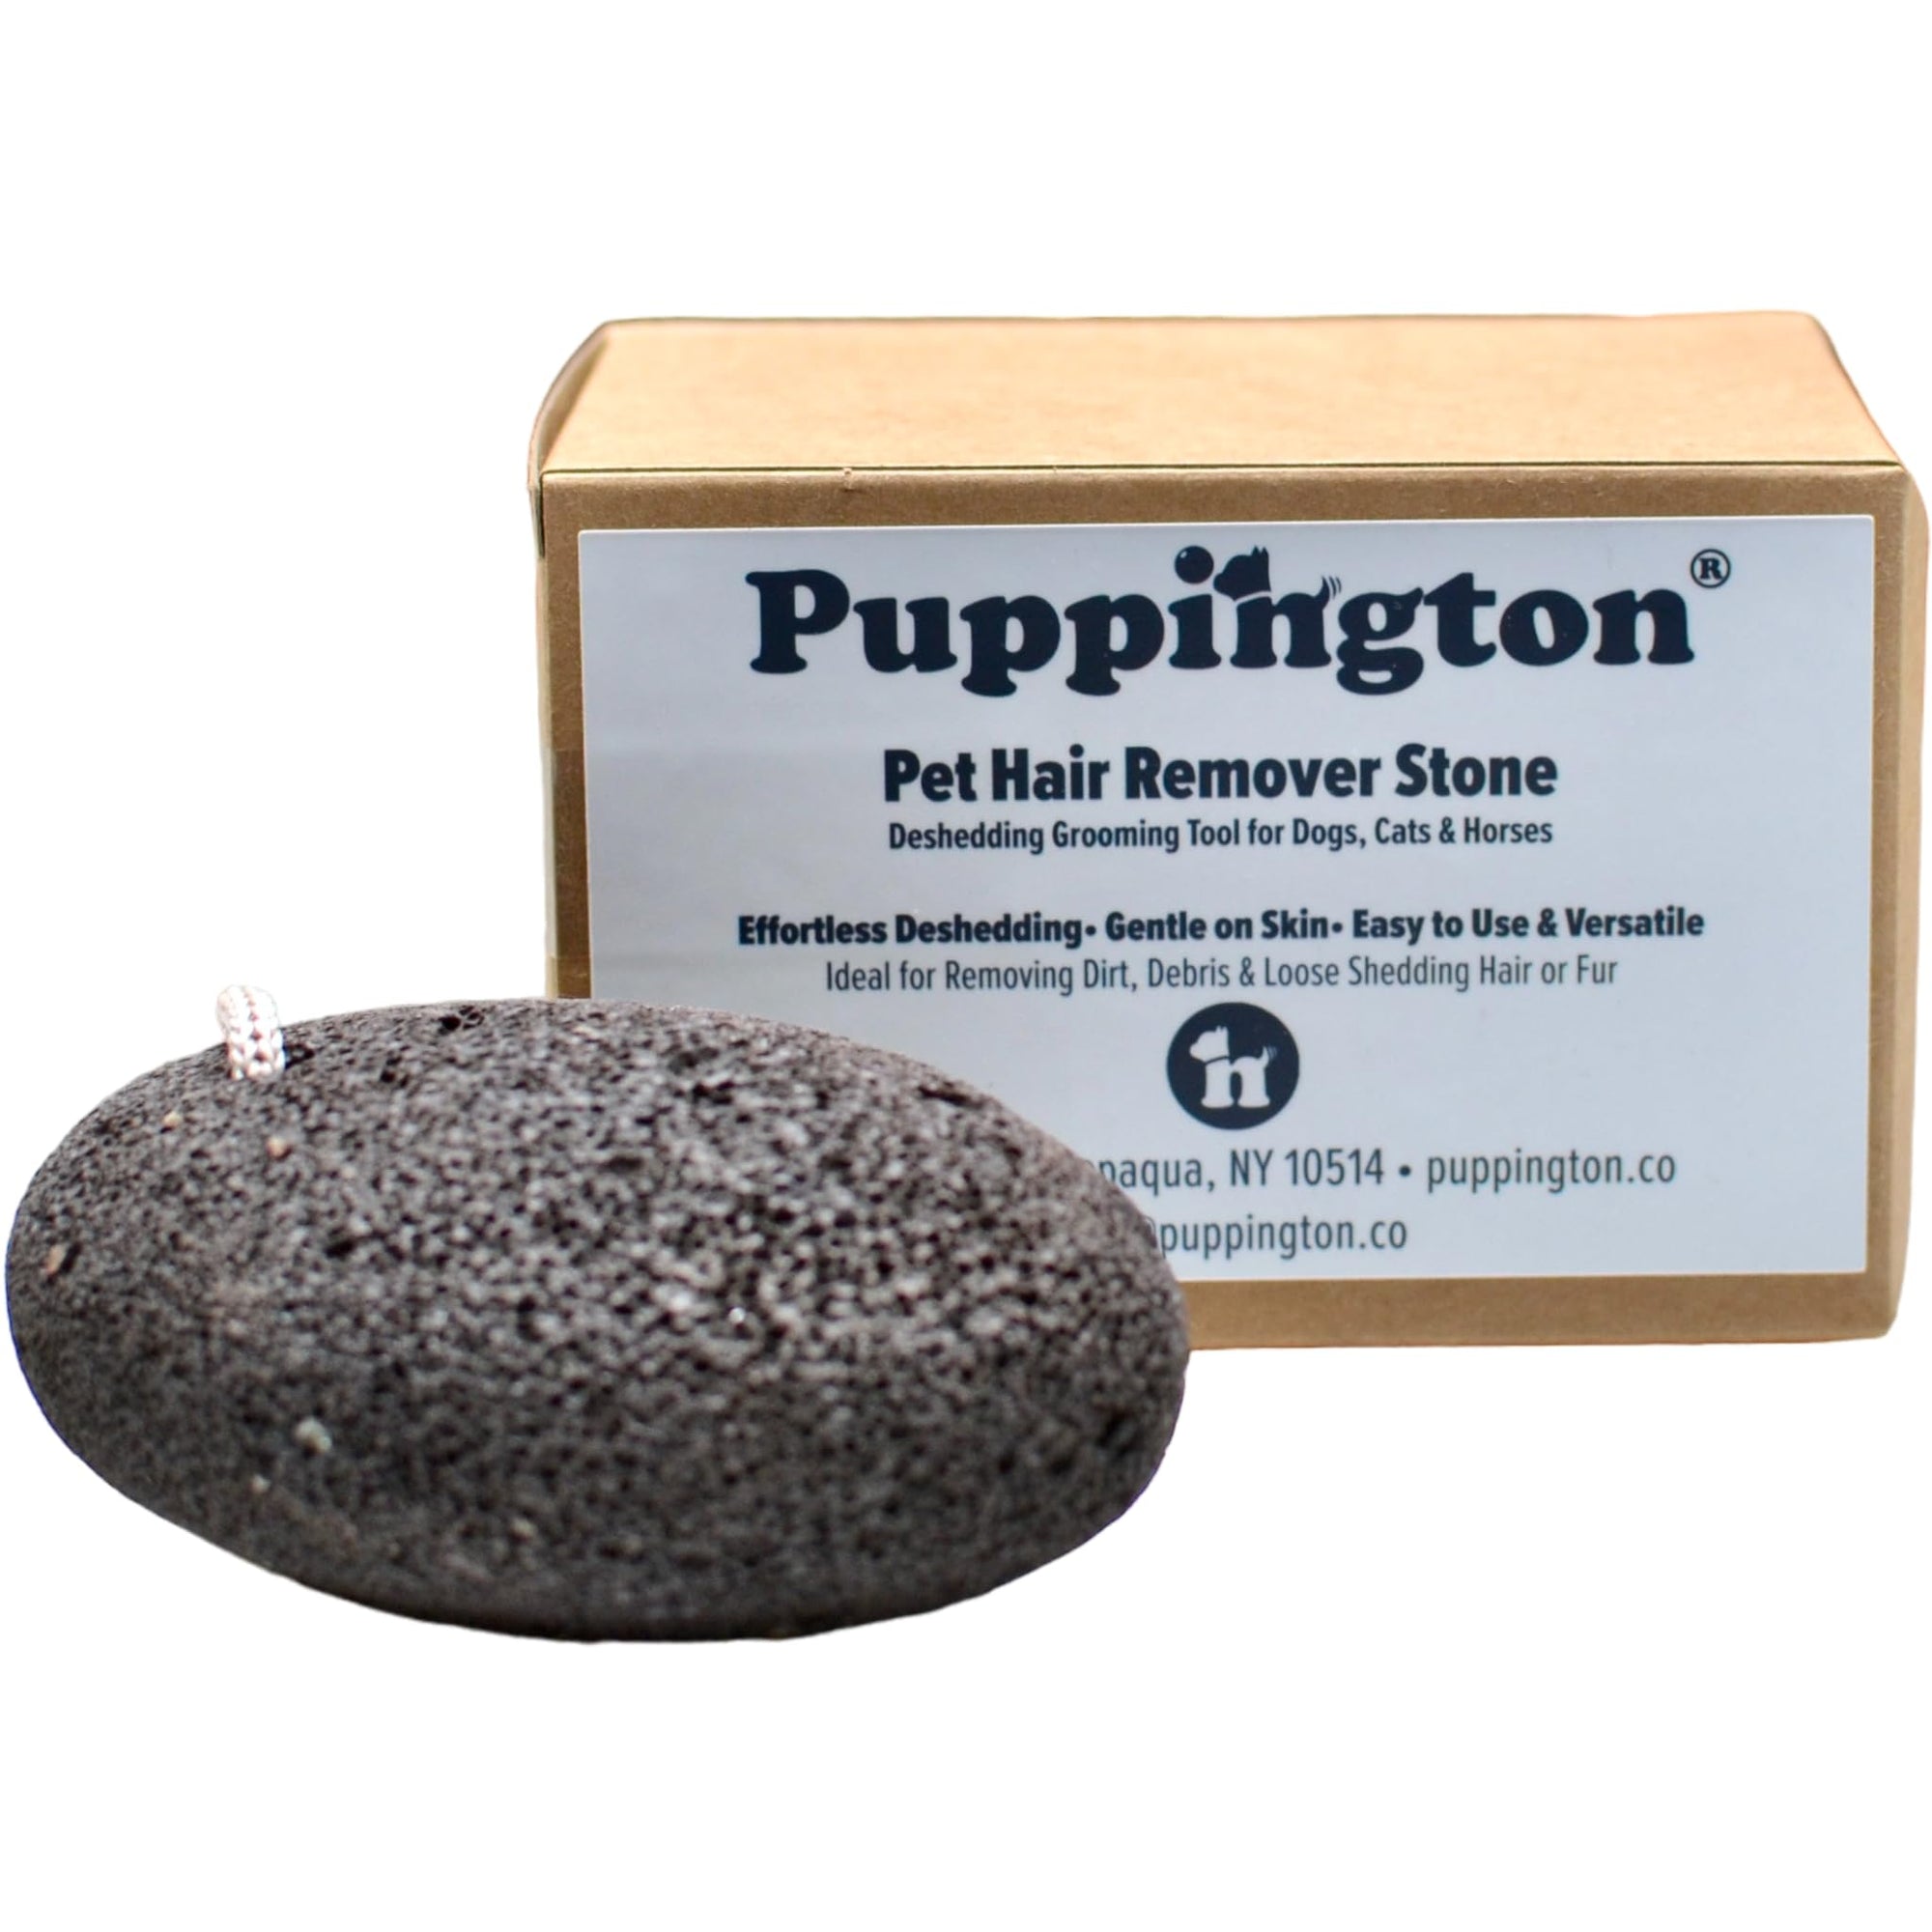 Puppington Deshedding Stone Pet Hair Remover